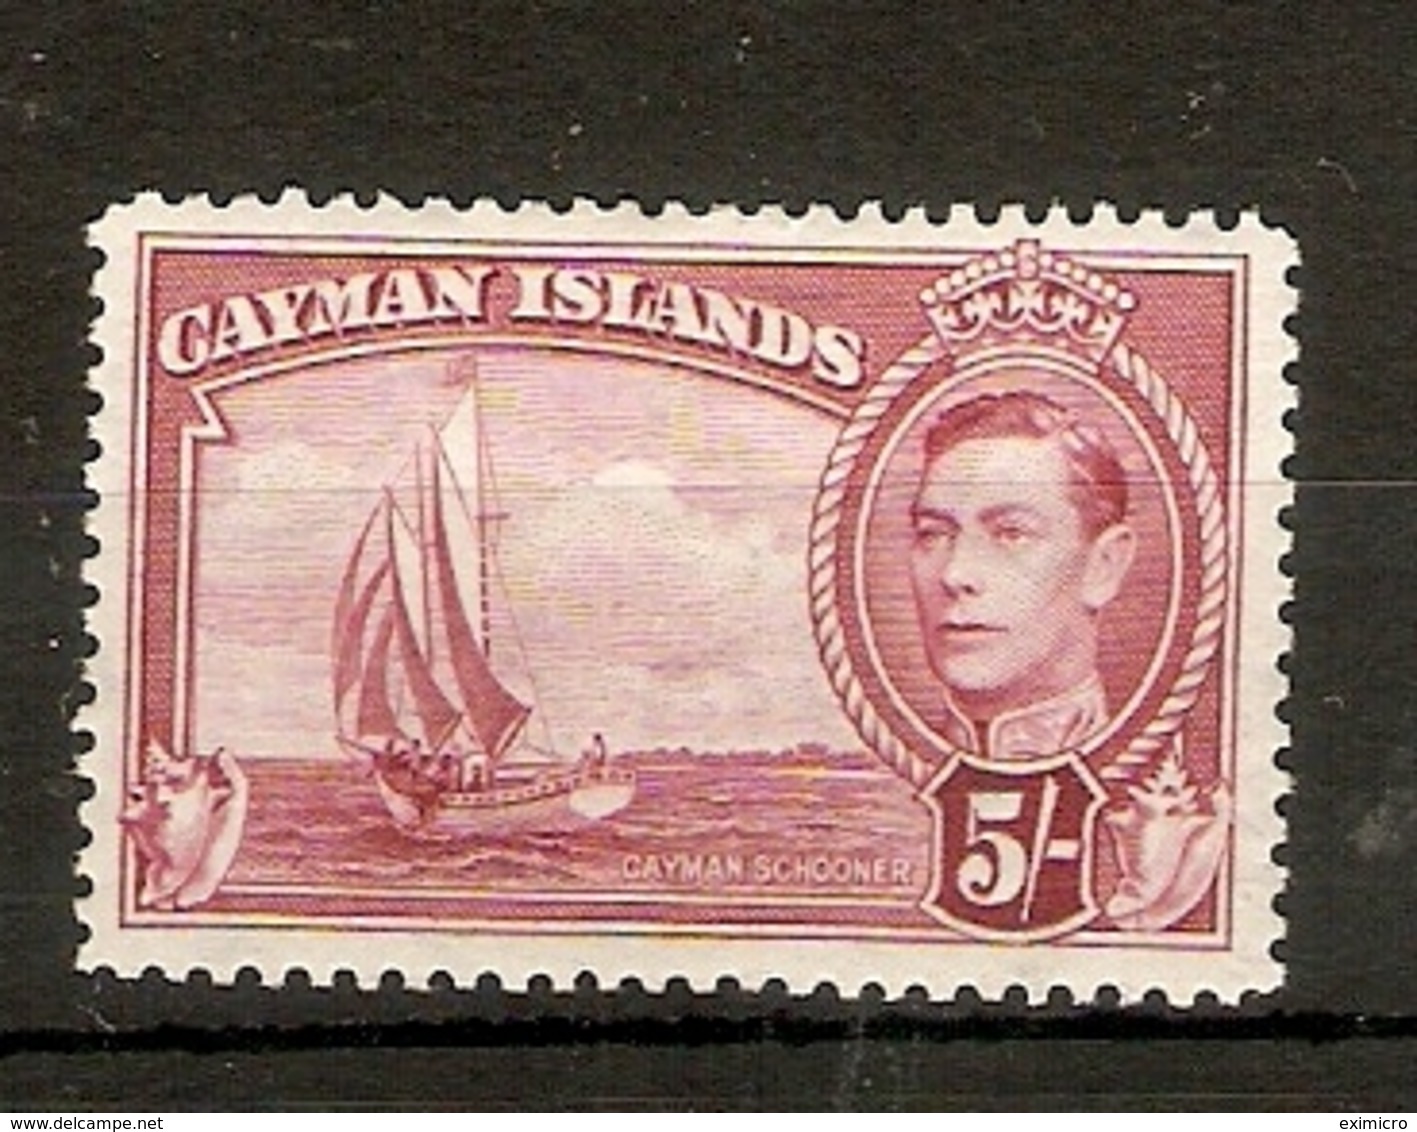 CAYMAN ISLANDS 1938 5s CARMINE - LAKE SG 125 LIGHTLY MOUNTED MINT Cat £45 - Kaaiman Eilanden